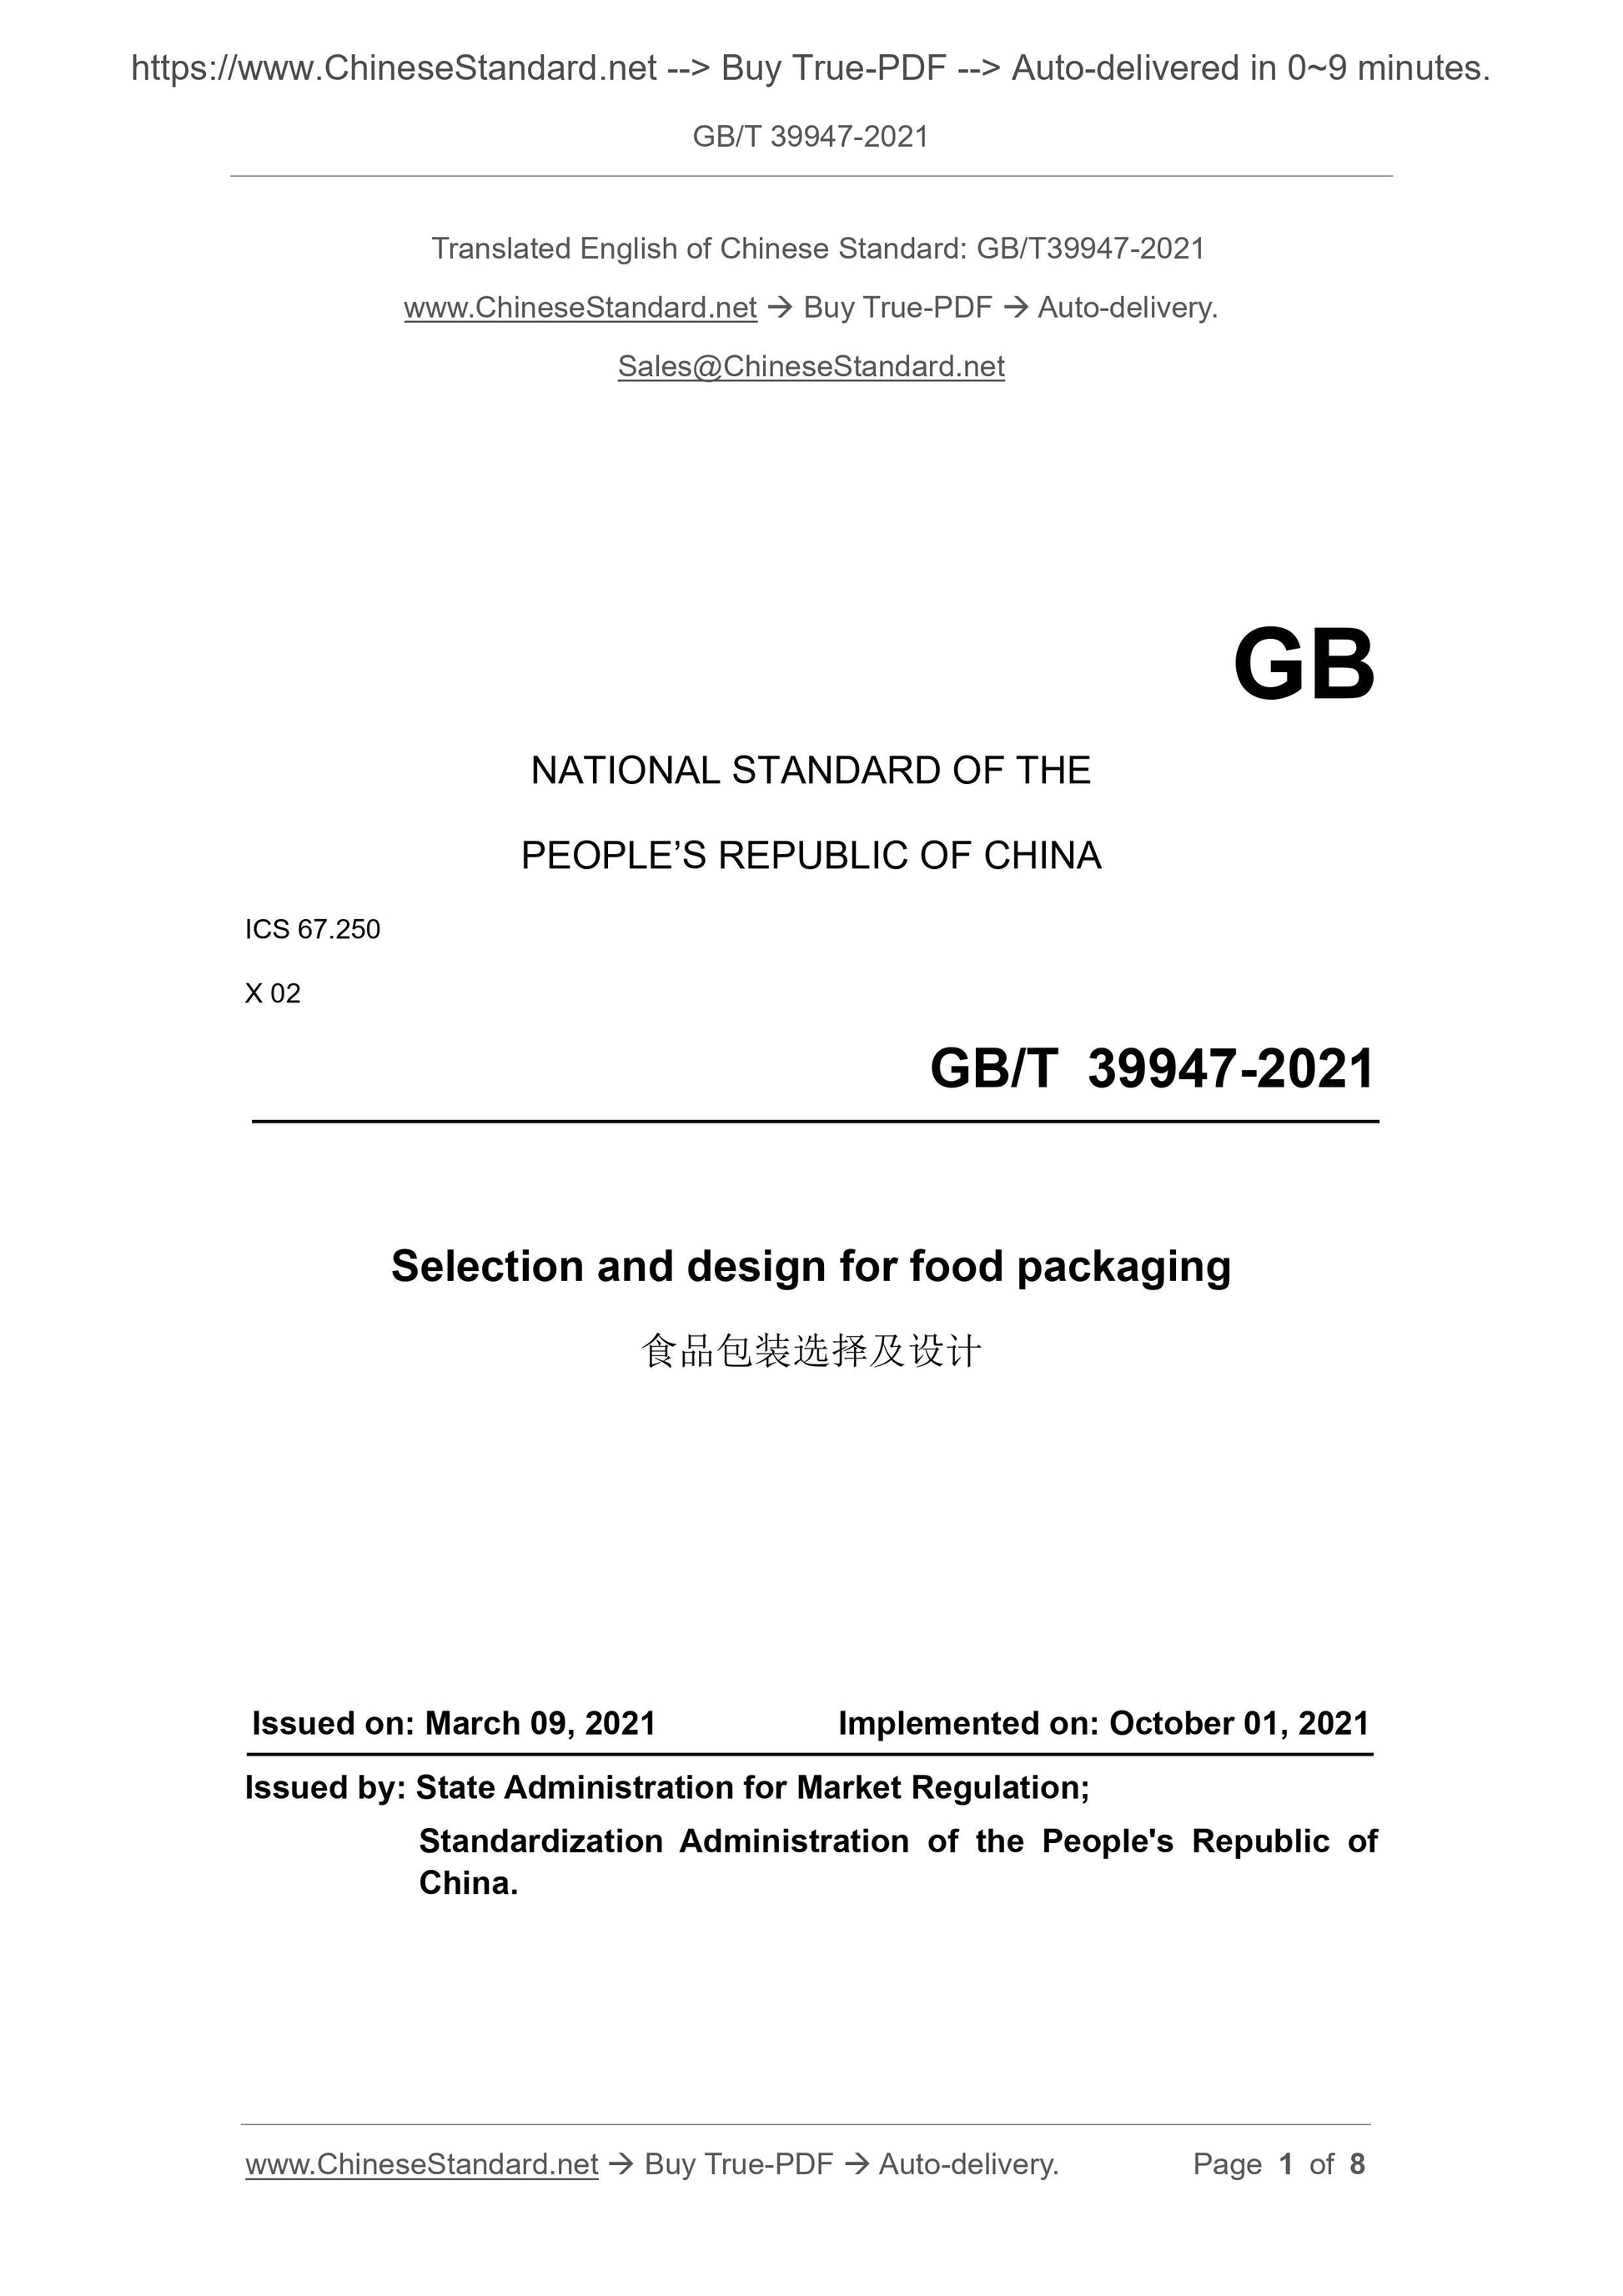 GBT39947-2021 Page 1